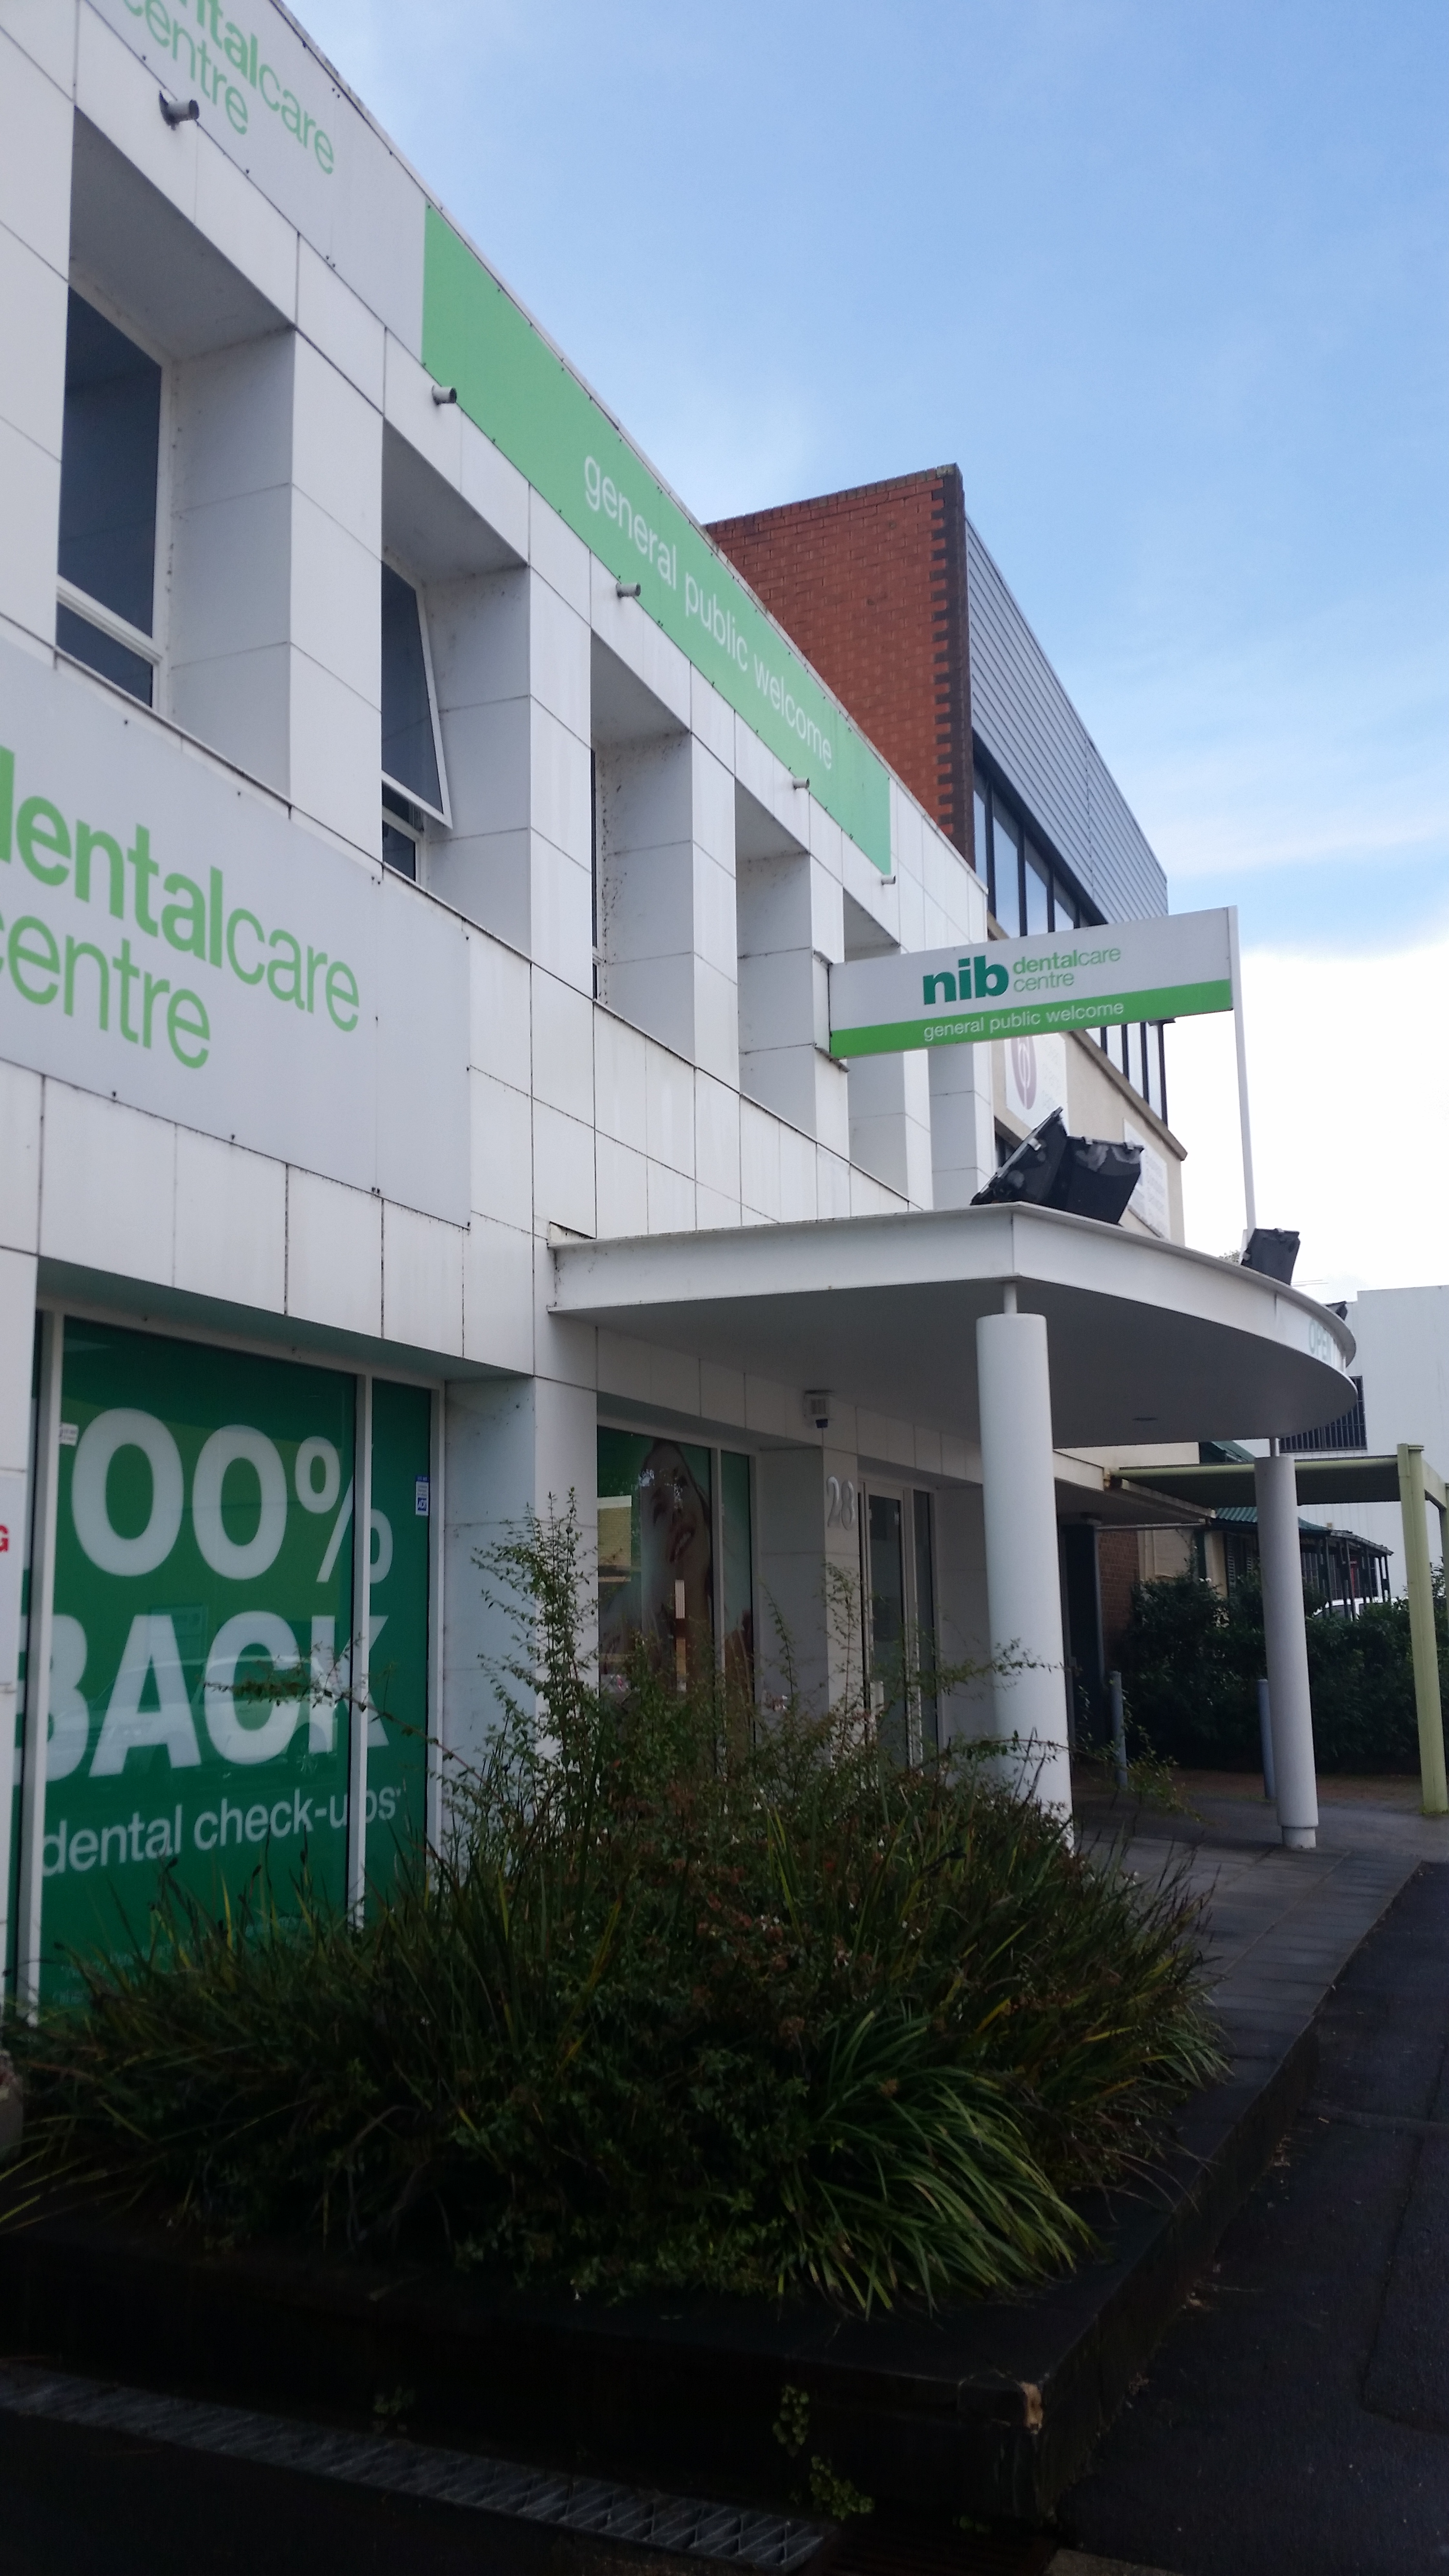 Images nib Dental Care Centre North Parramatta